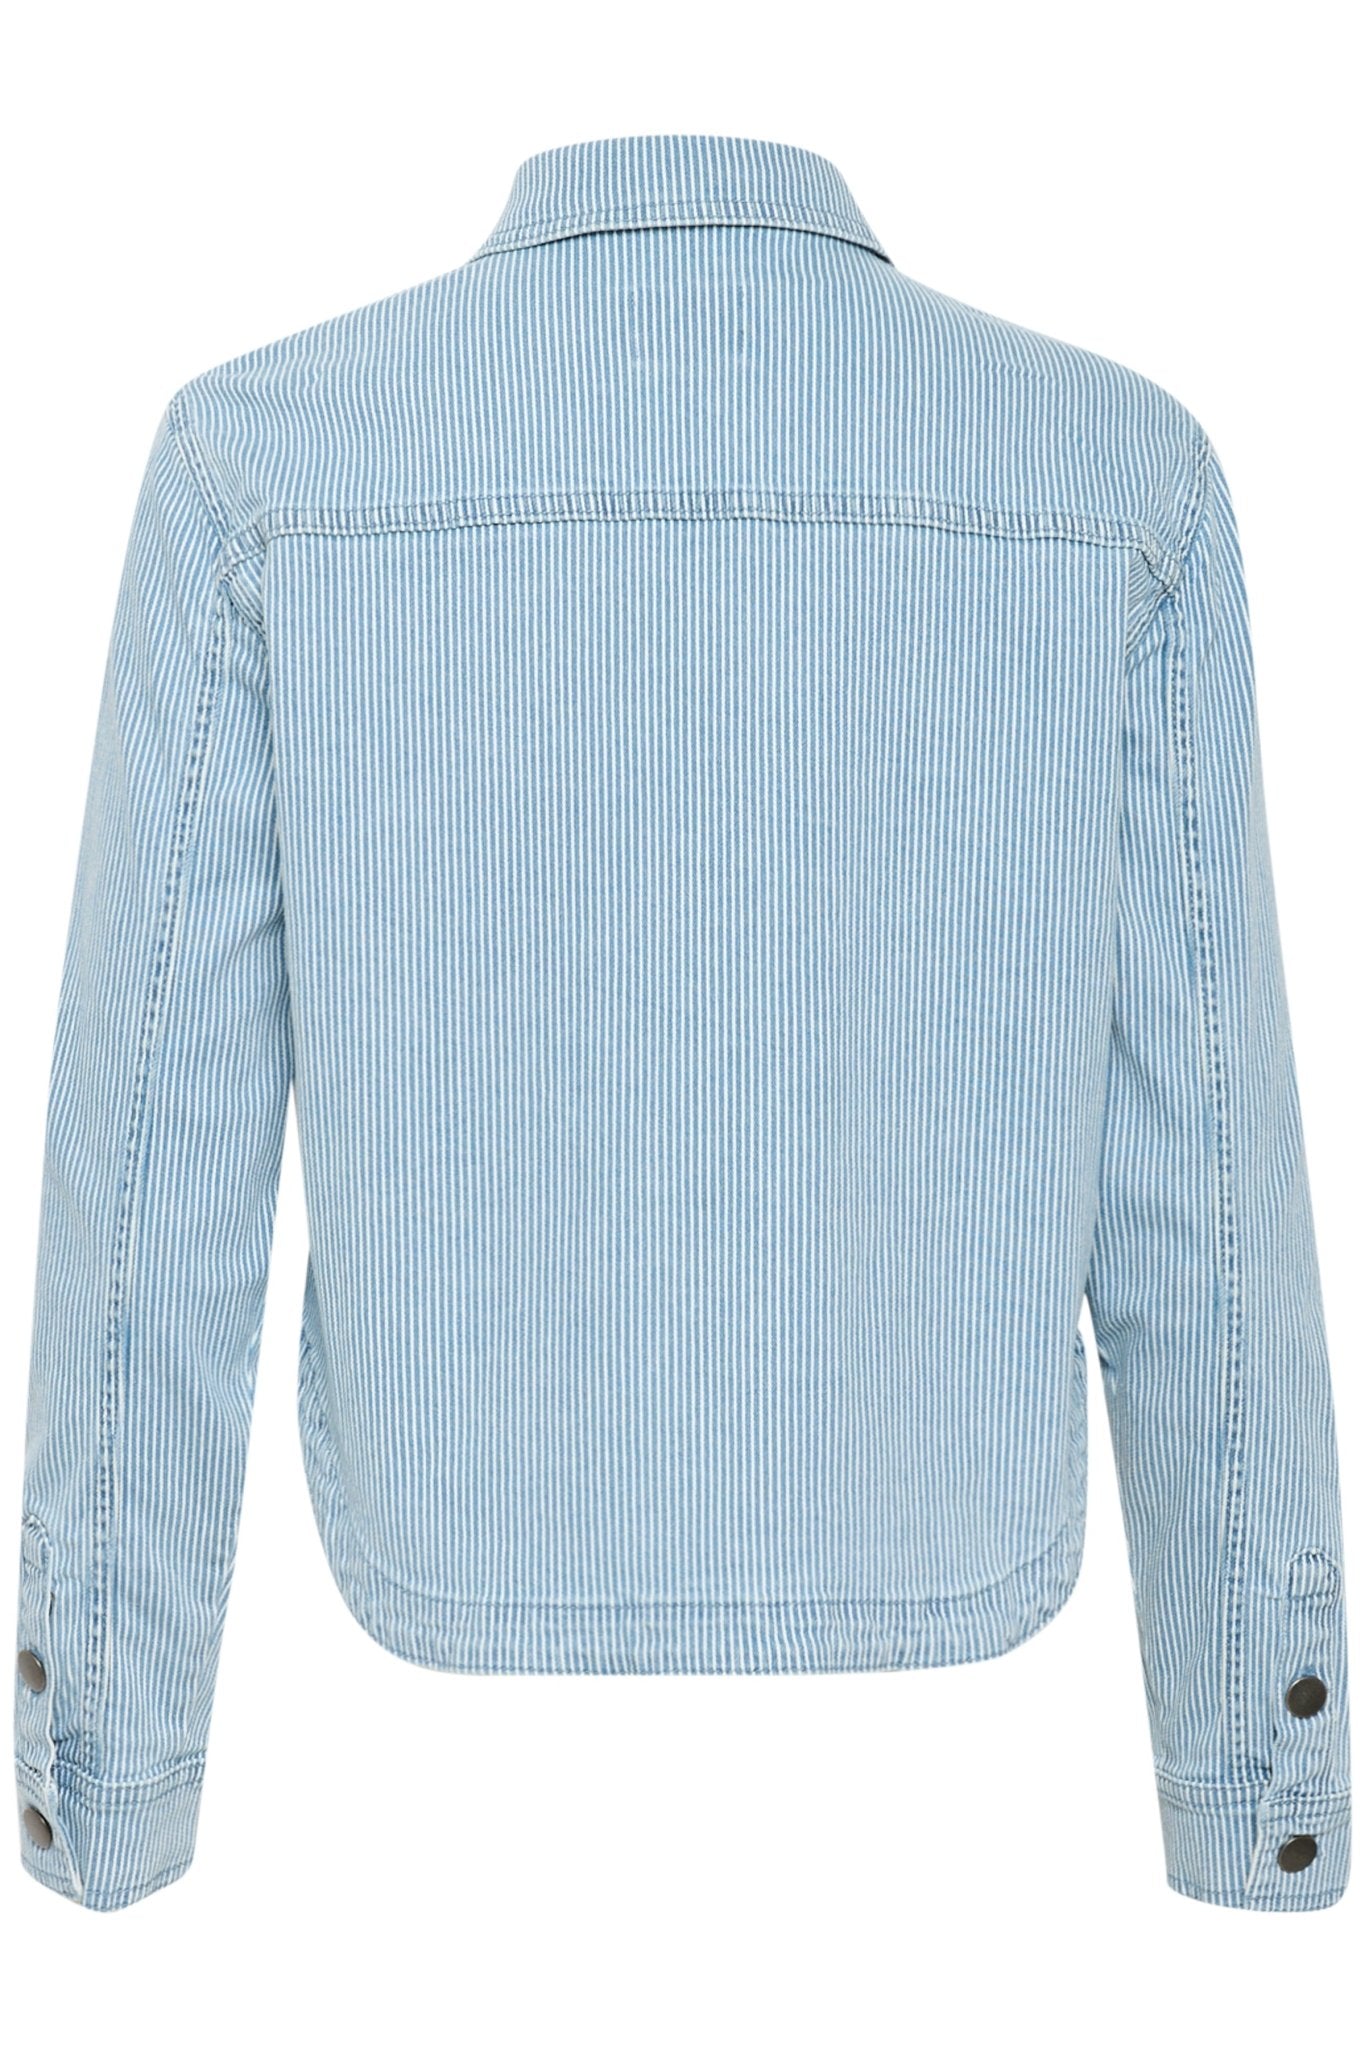 Milky Denim Jacket by Culture - Blue Sky Fashions & Lingerie